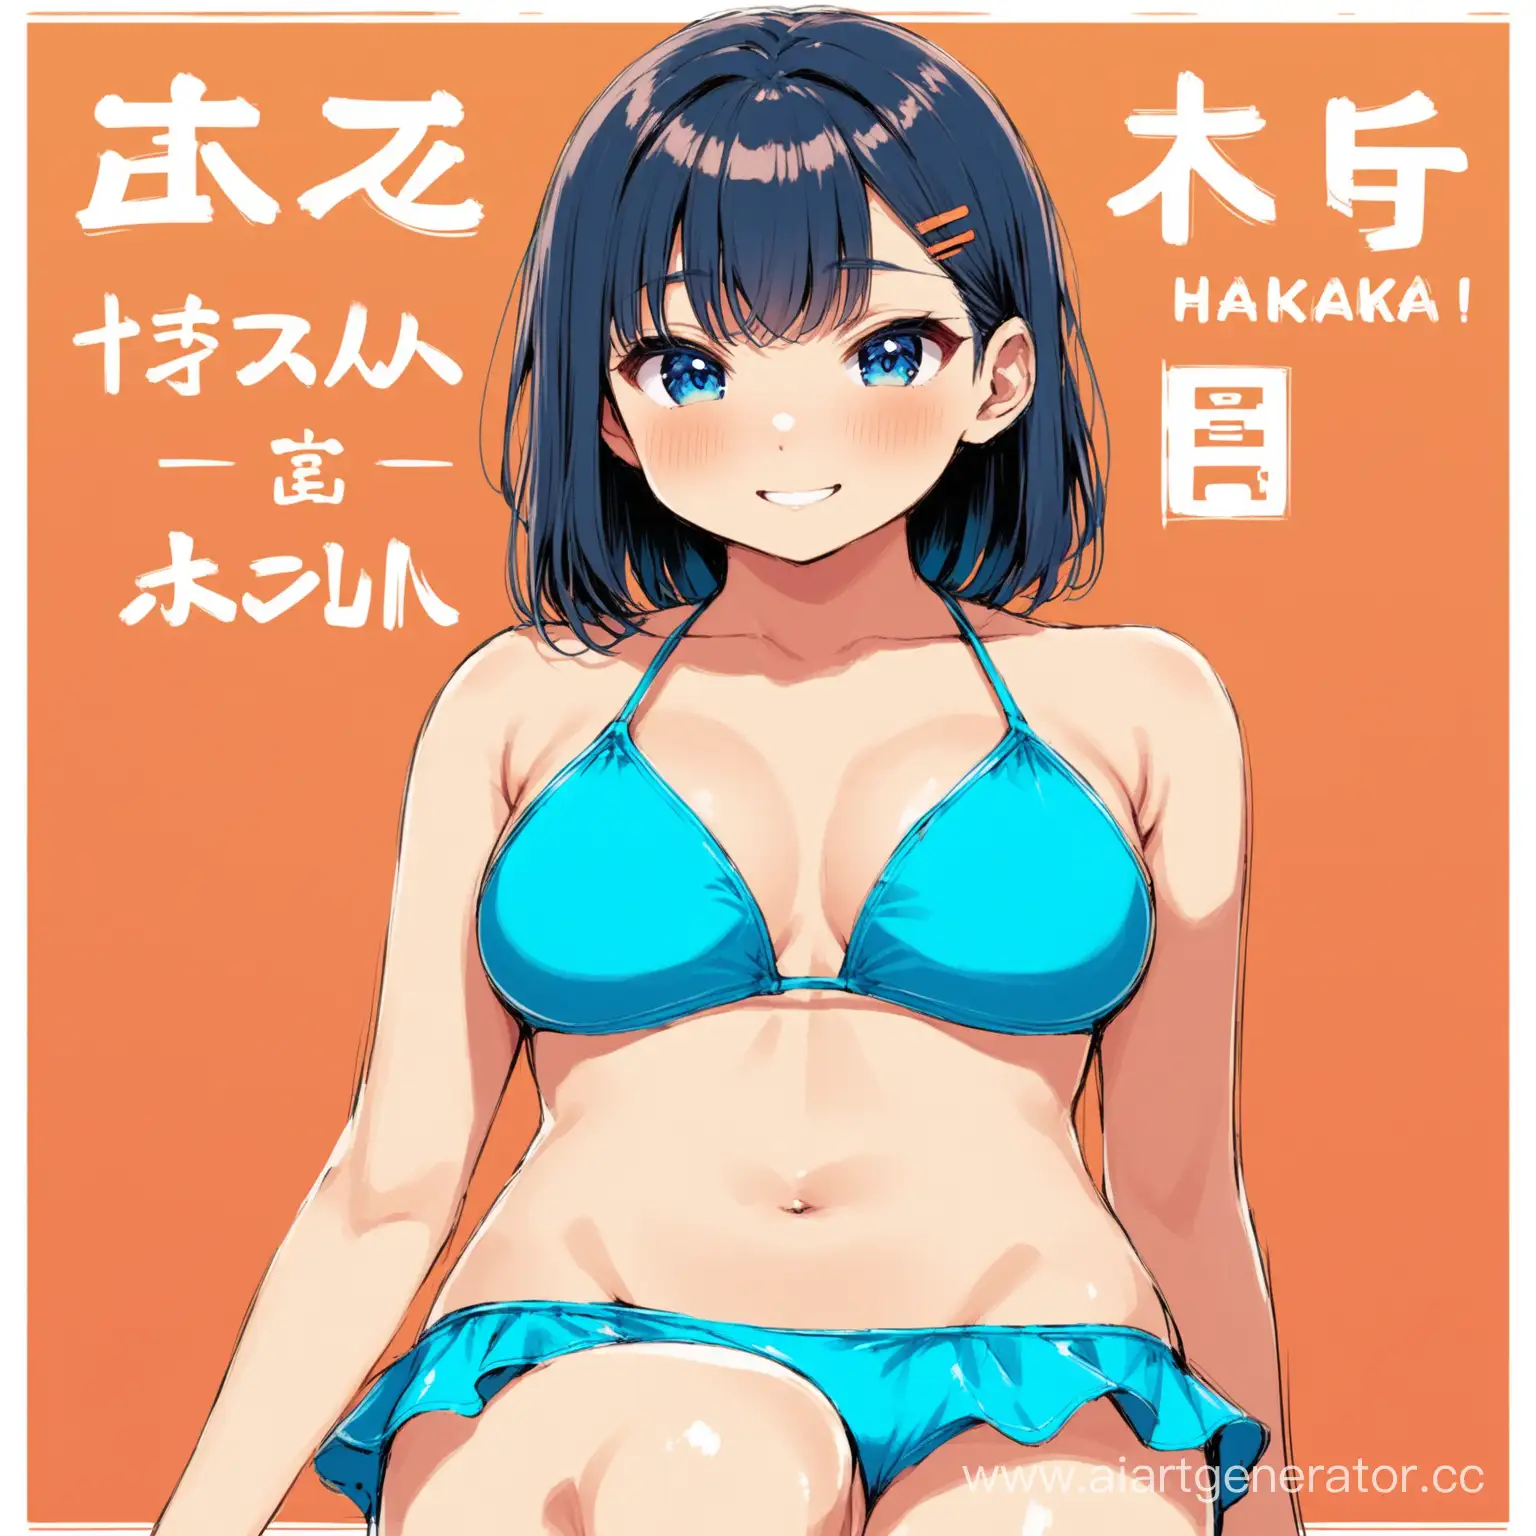 Young-Girl-in-Swimsuit-Named-Hakkai